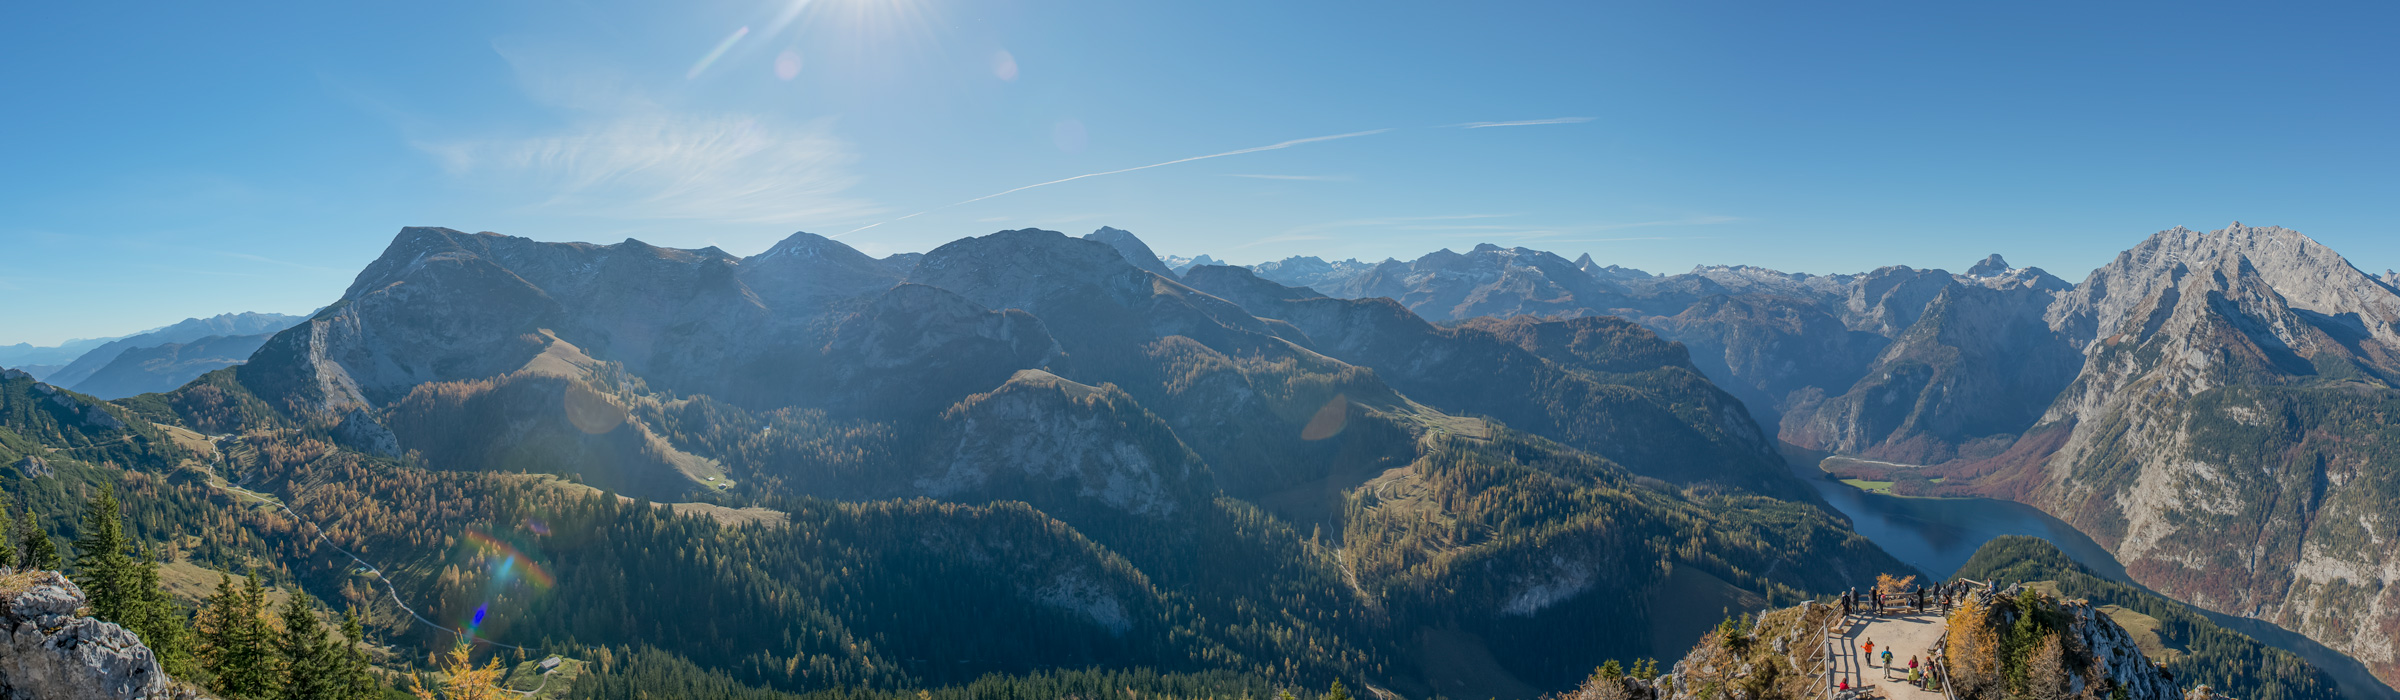 Panoramaufnahme der Landschaft in Berchtesgaden